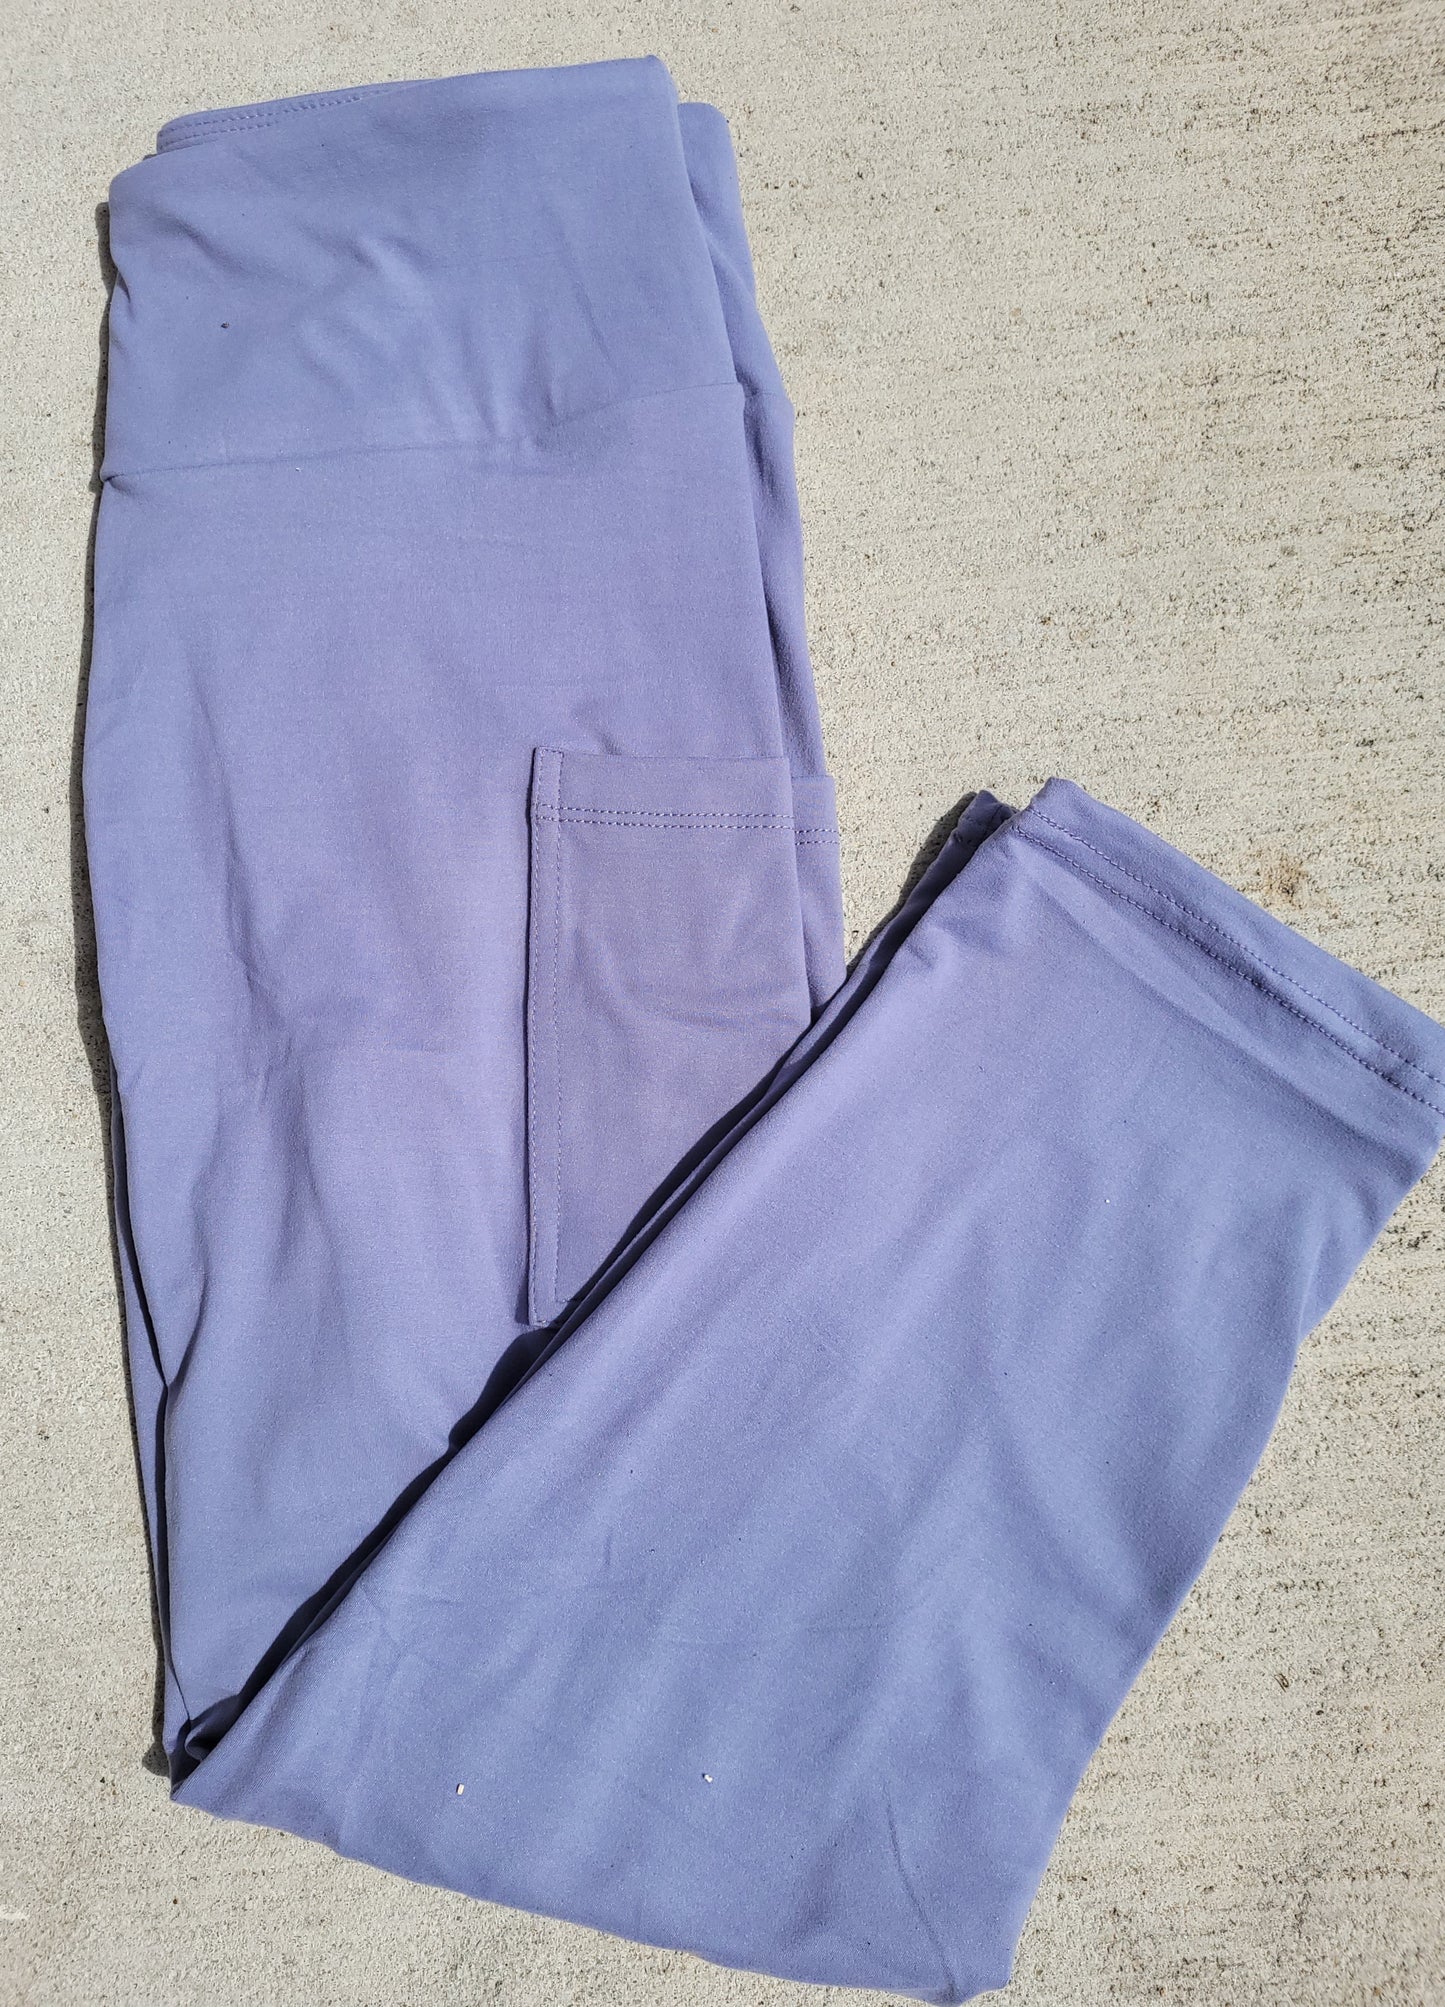 Light Purple capri leggings and shorts with pockets